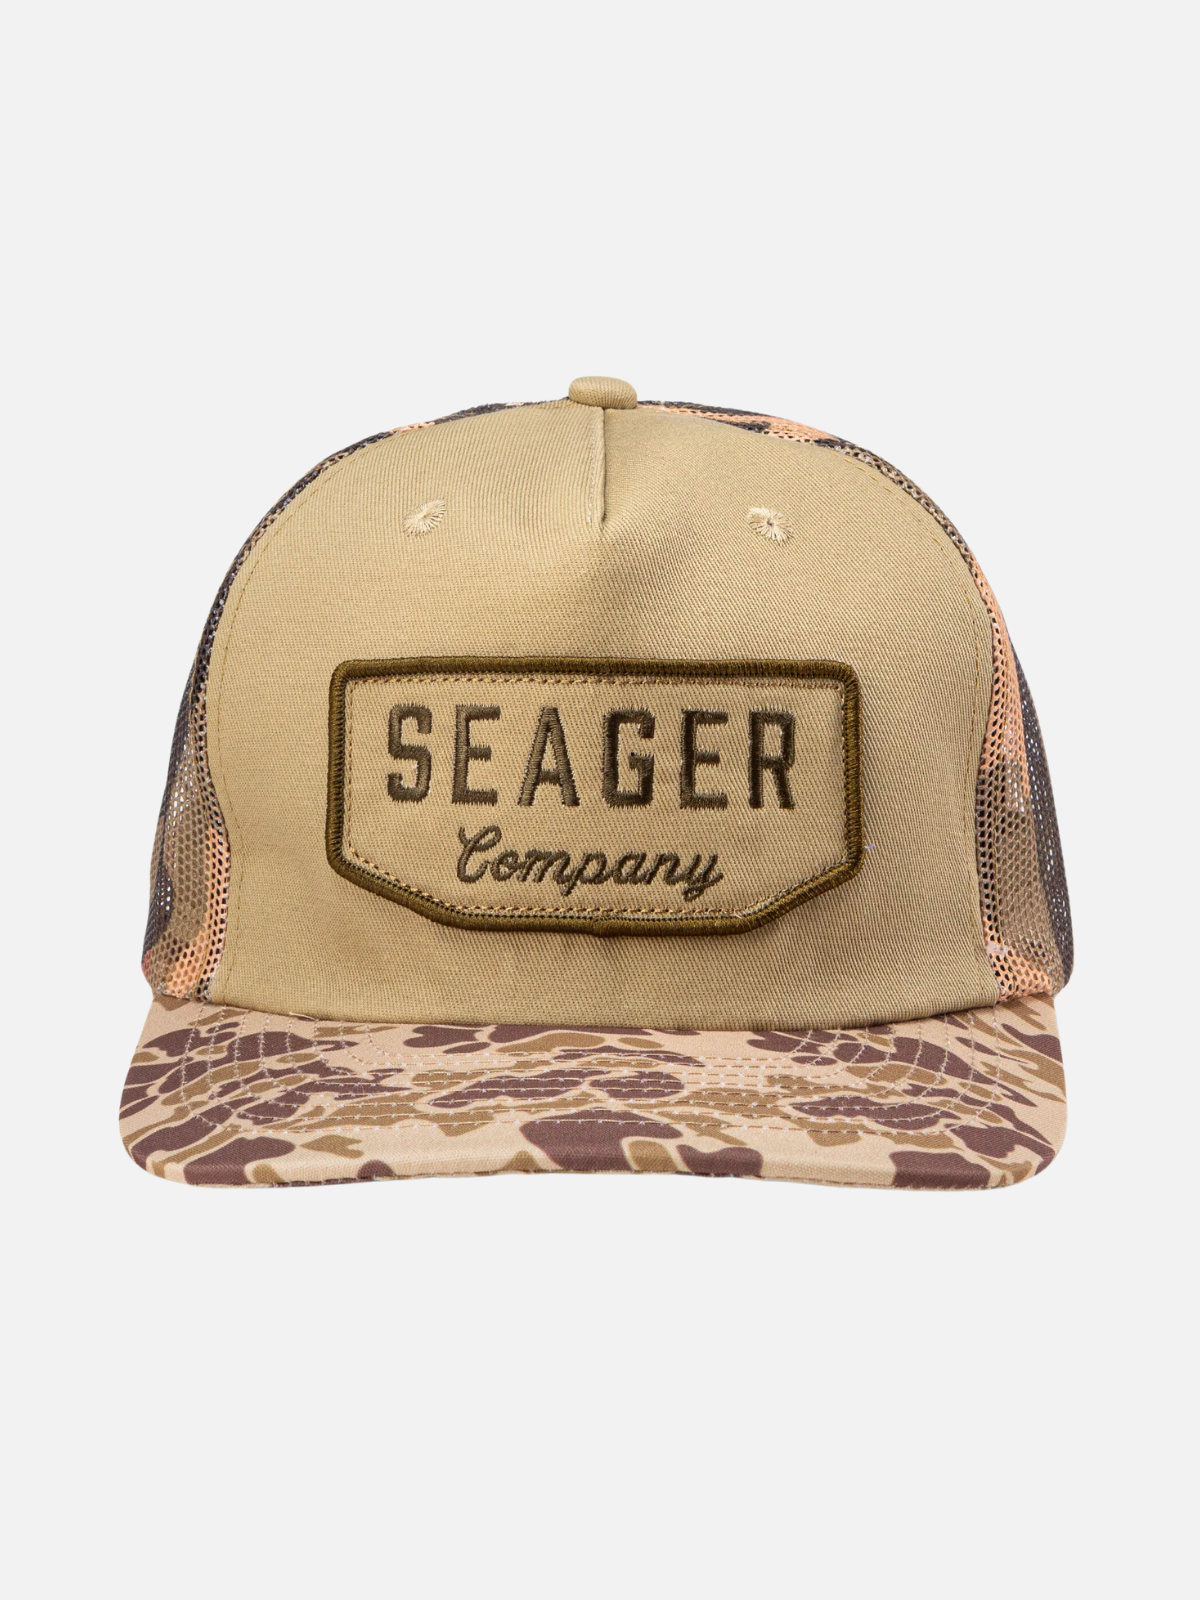 seager wilson mesh snapback trucker cap cotton nylon blend hat duck camo green brown tan kempt athens ga georgia men's clothing store